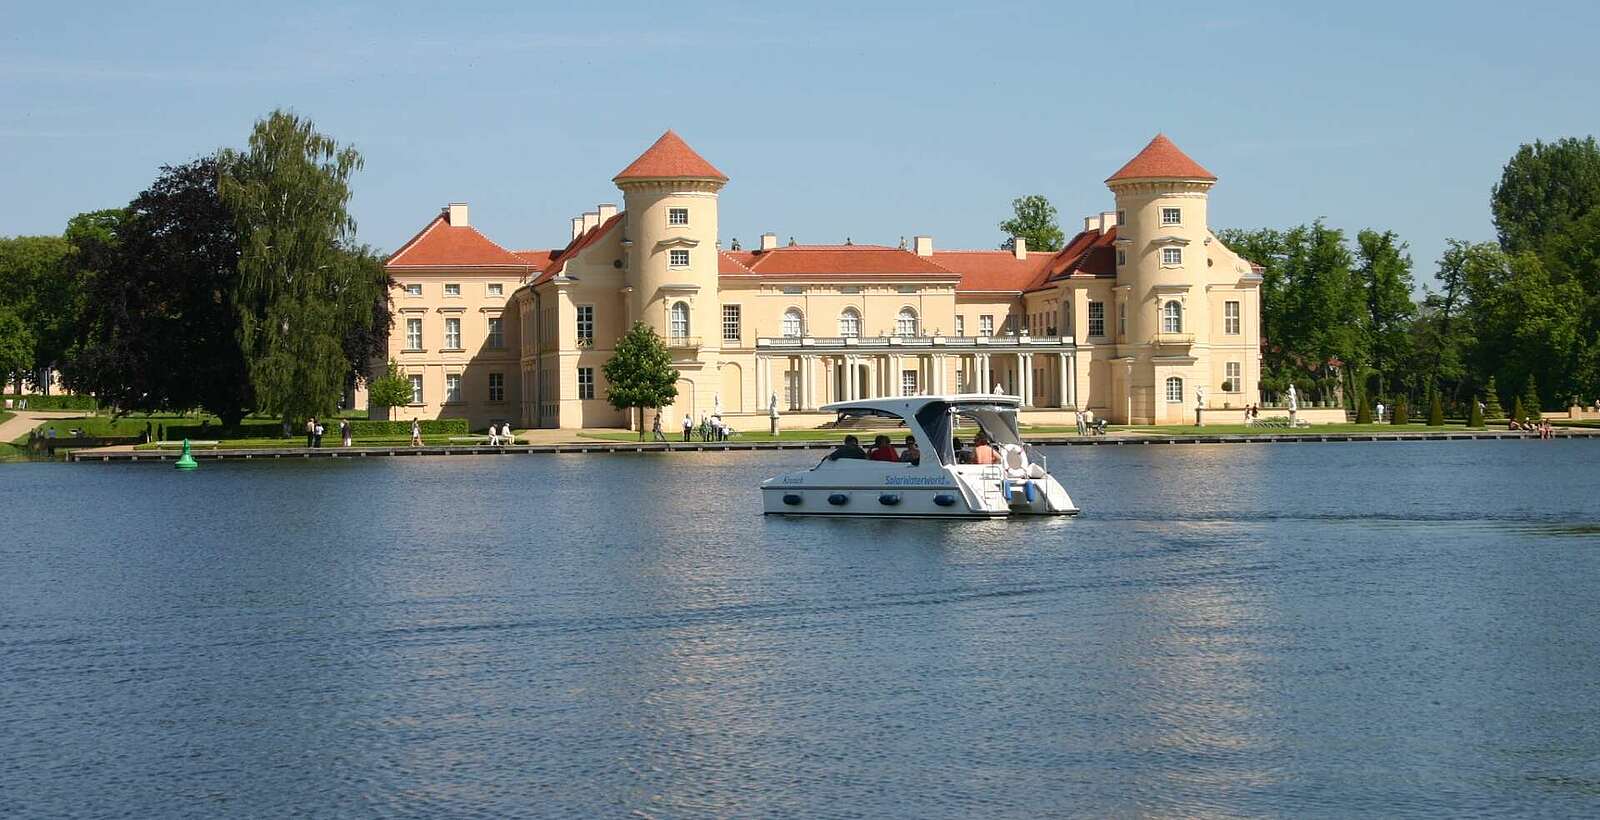 Motorboot vor Schloss Rheinsberg,
        
    

        Foto: Tourismusverband Ruppiner Seenland e.V./Judith Kerrmann